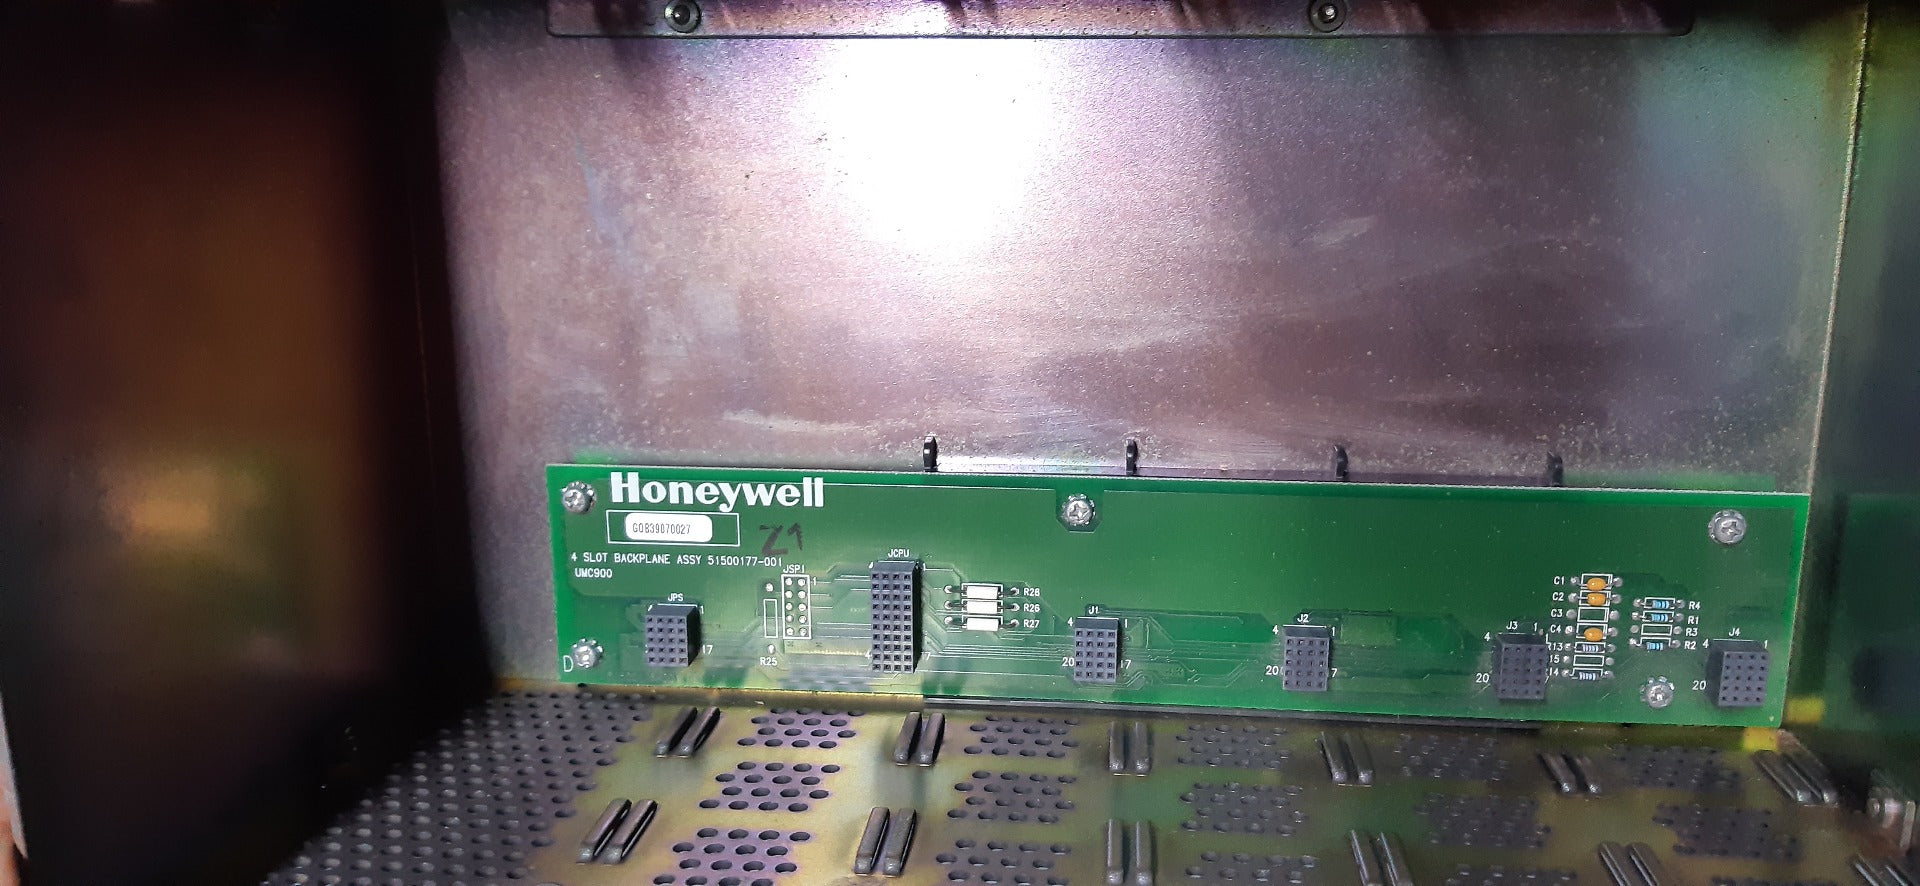 Honeywell hc900 controller 900r04-0001 4 i/o slot rack